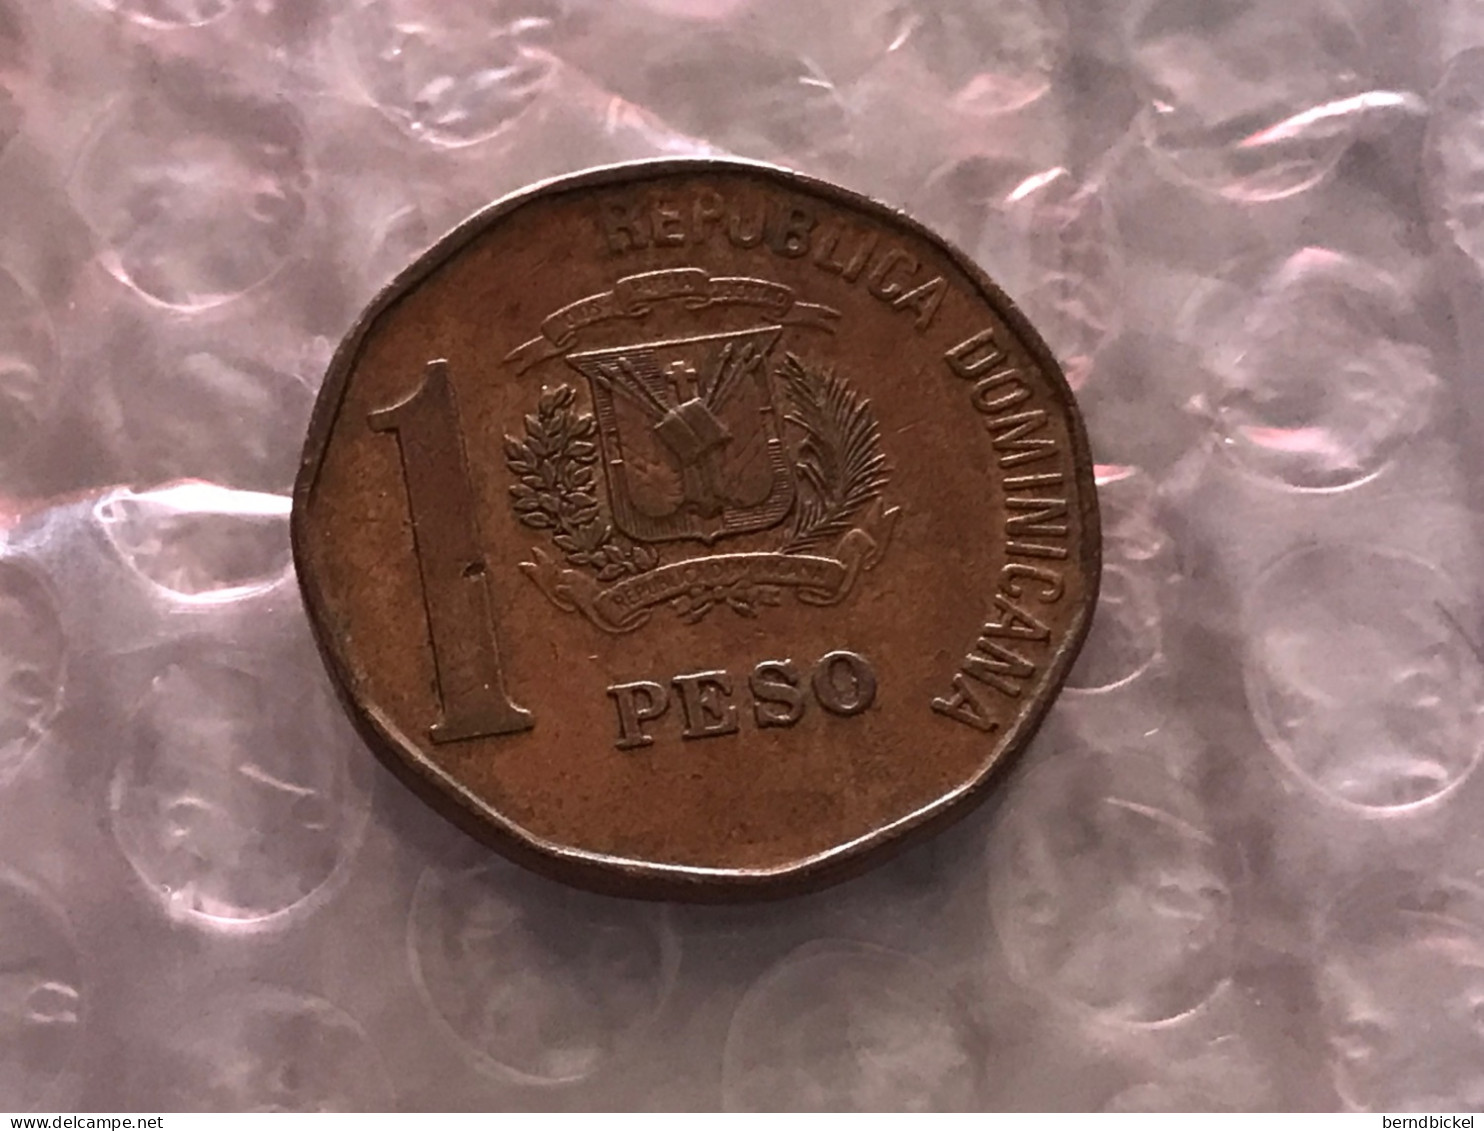 Münze Münzen Umlaufmünze Dominikanische Republik 1 Peso 1992 - Dominicaine